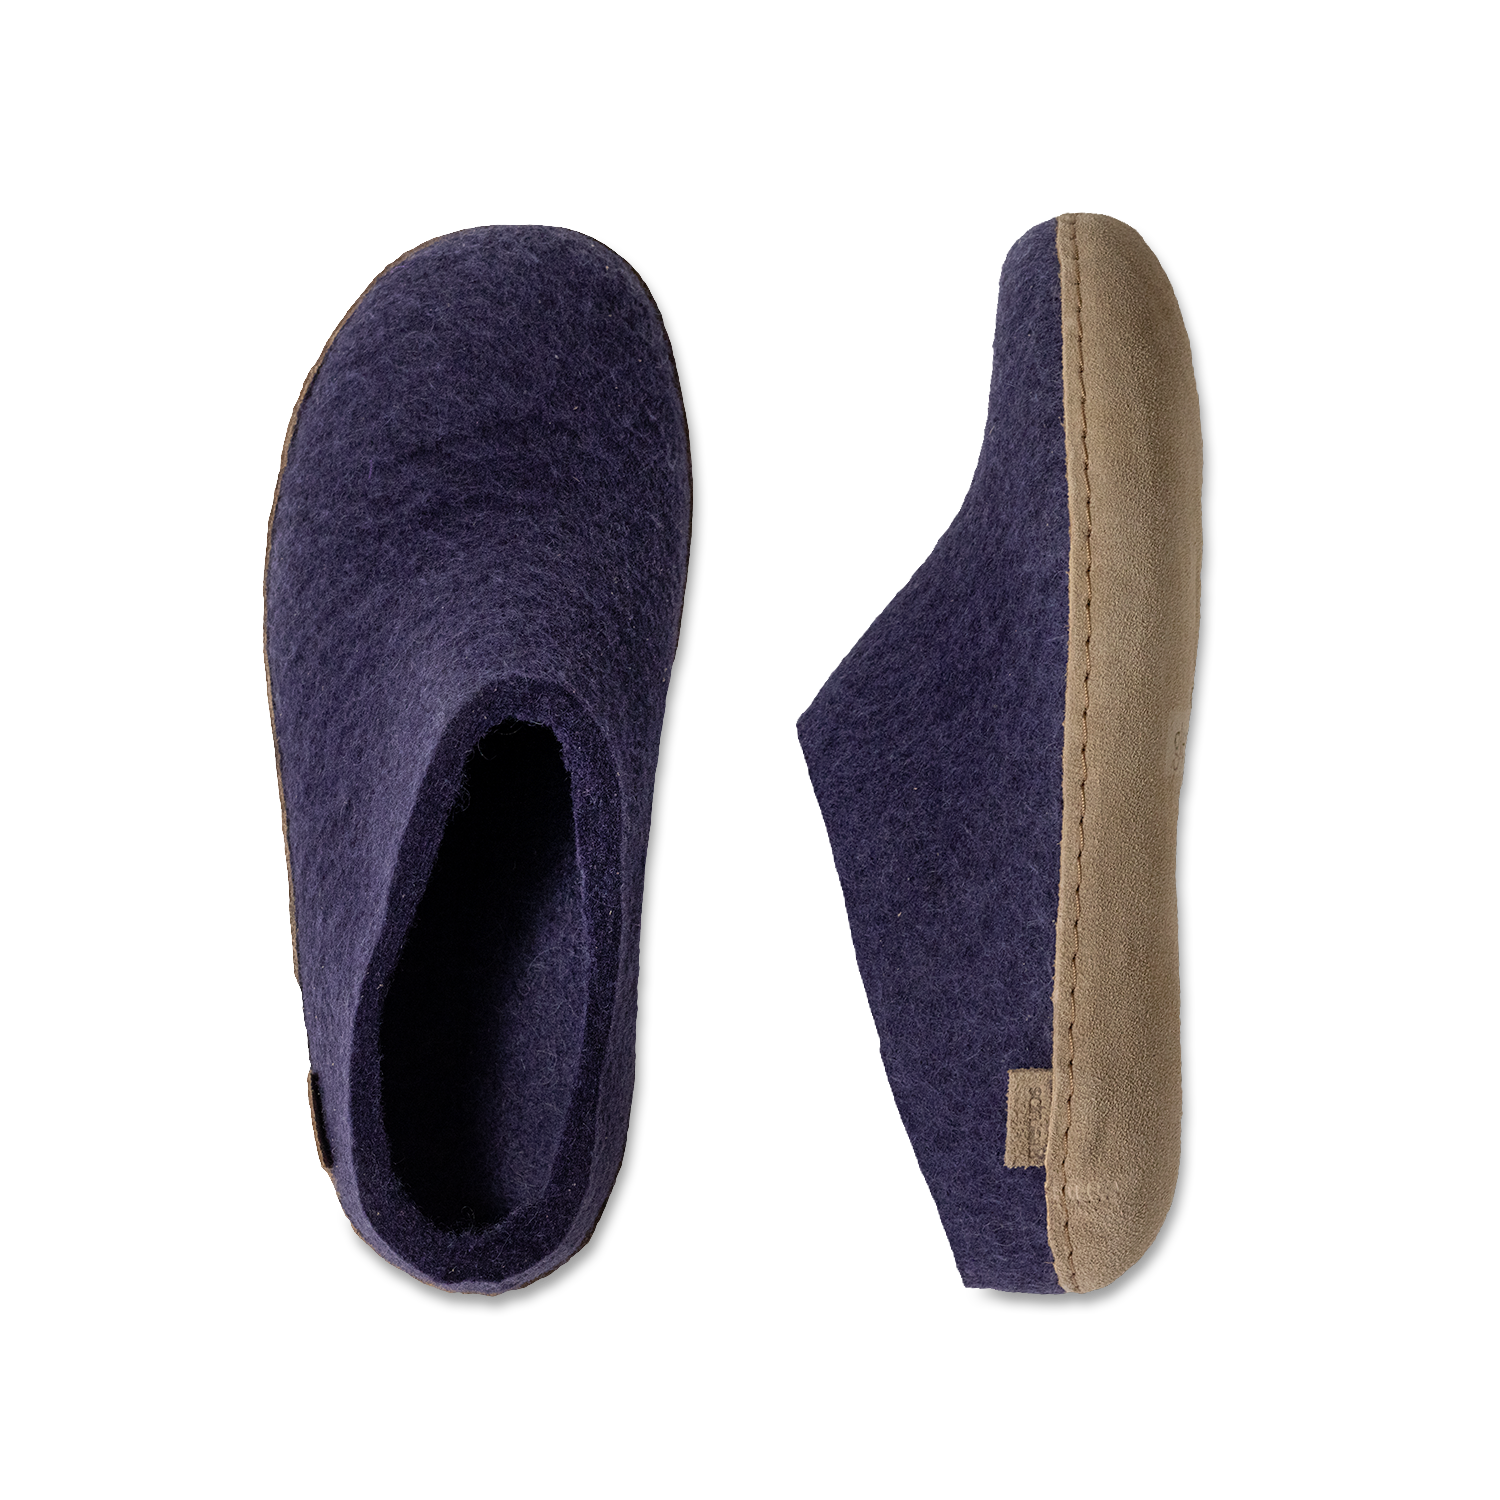 Glerups Slip-on Purple - Leather Sole